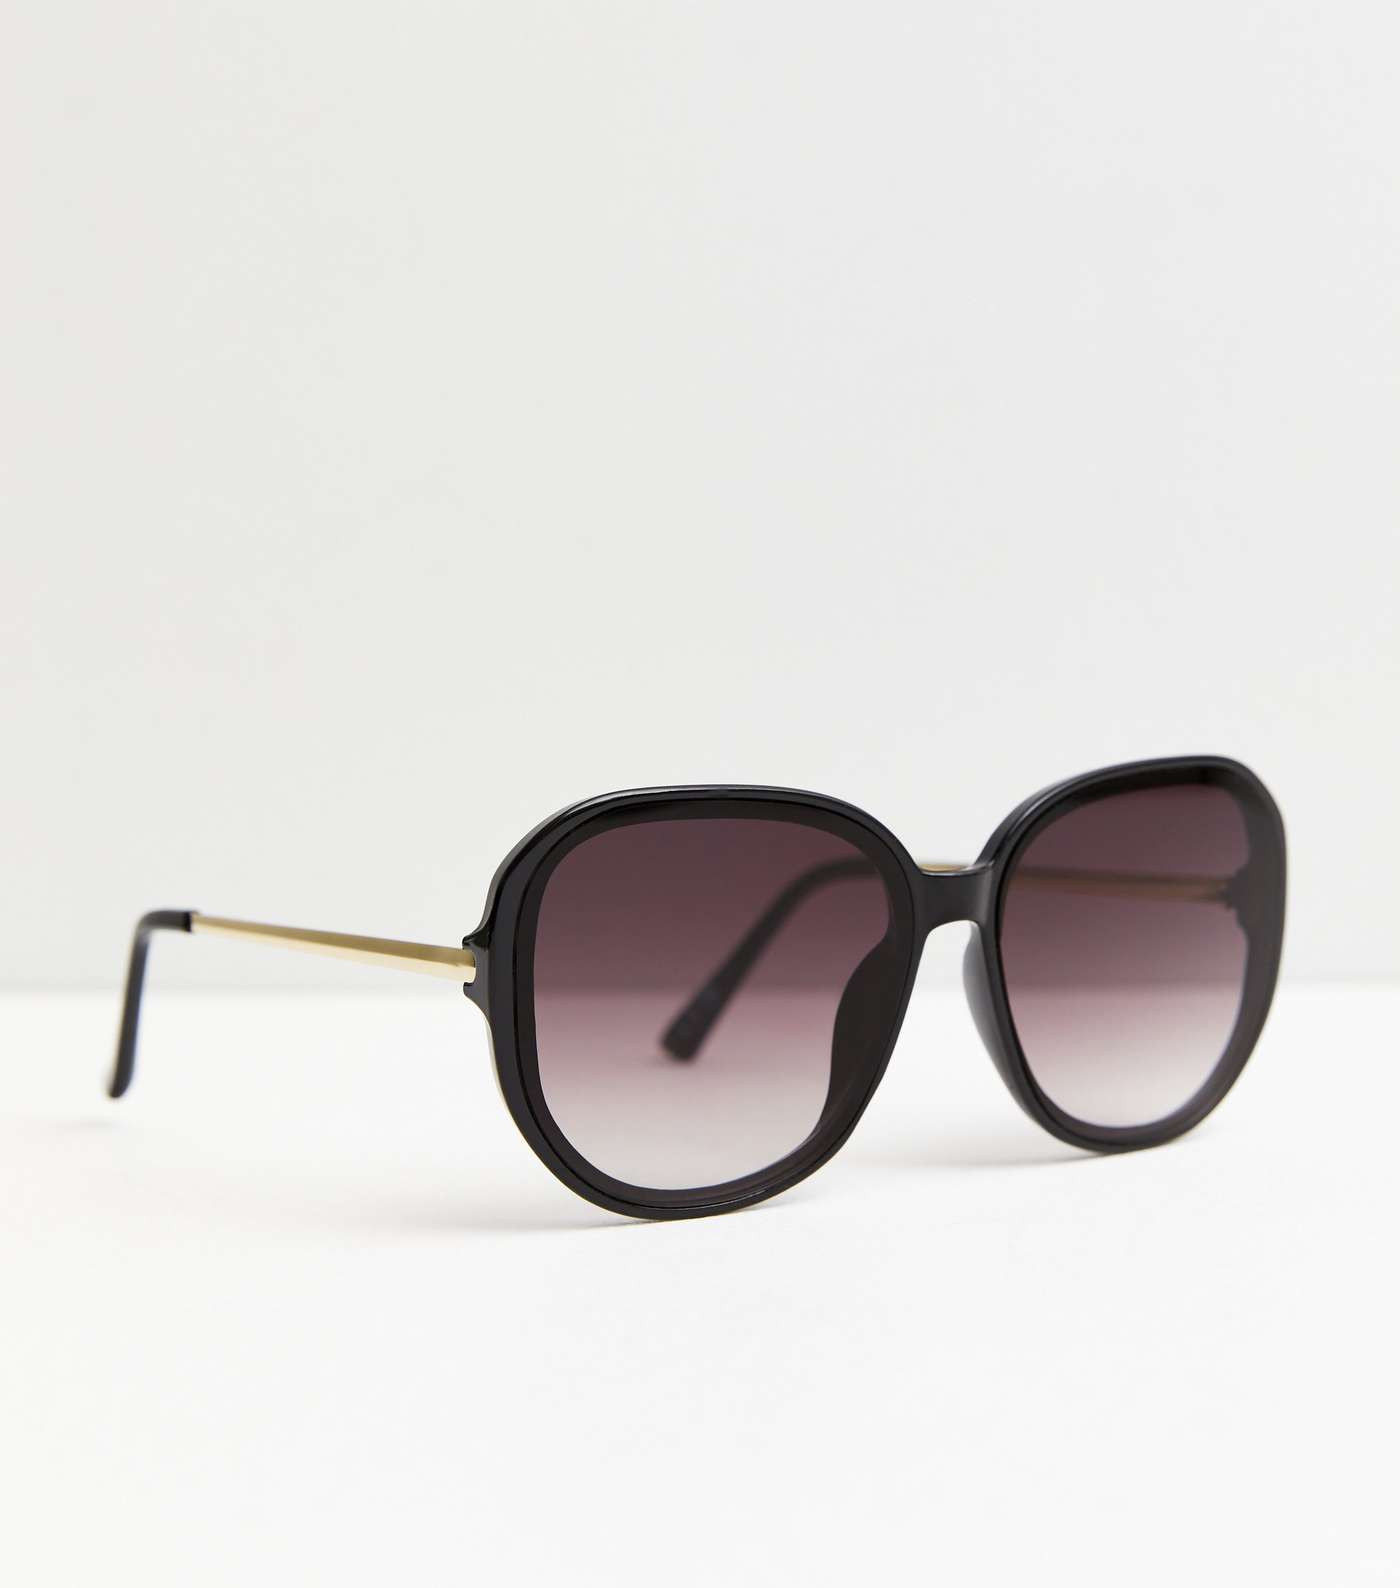 Black Square Frame Sunglasses Image 2